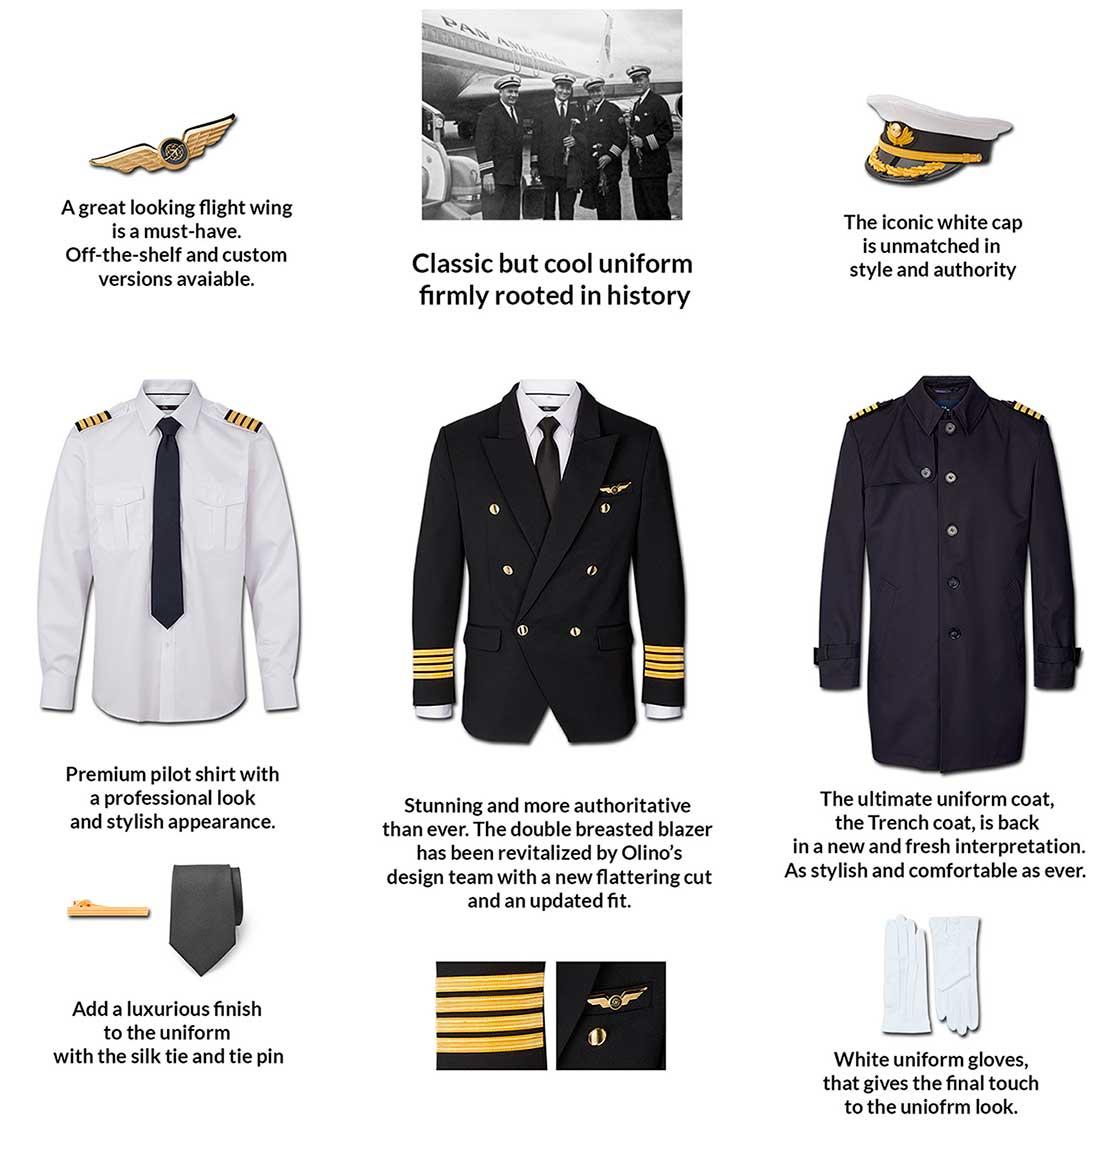 Redesigned pilot uniform collection